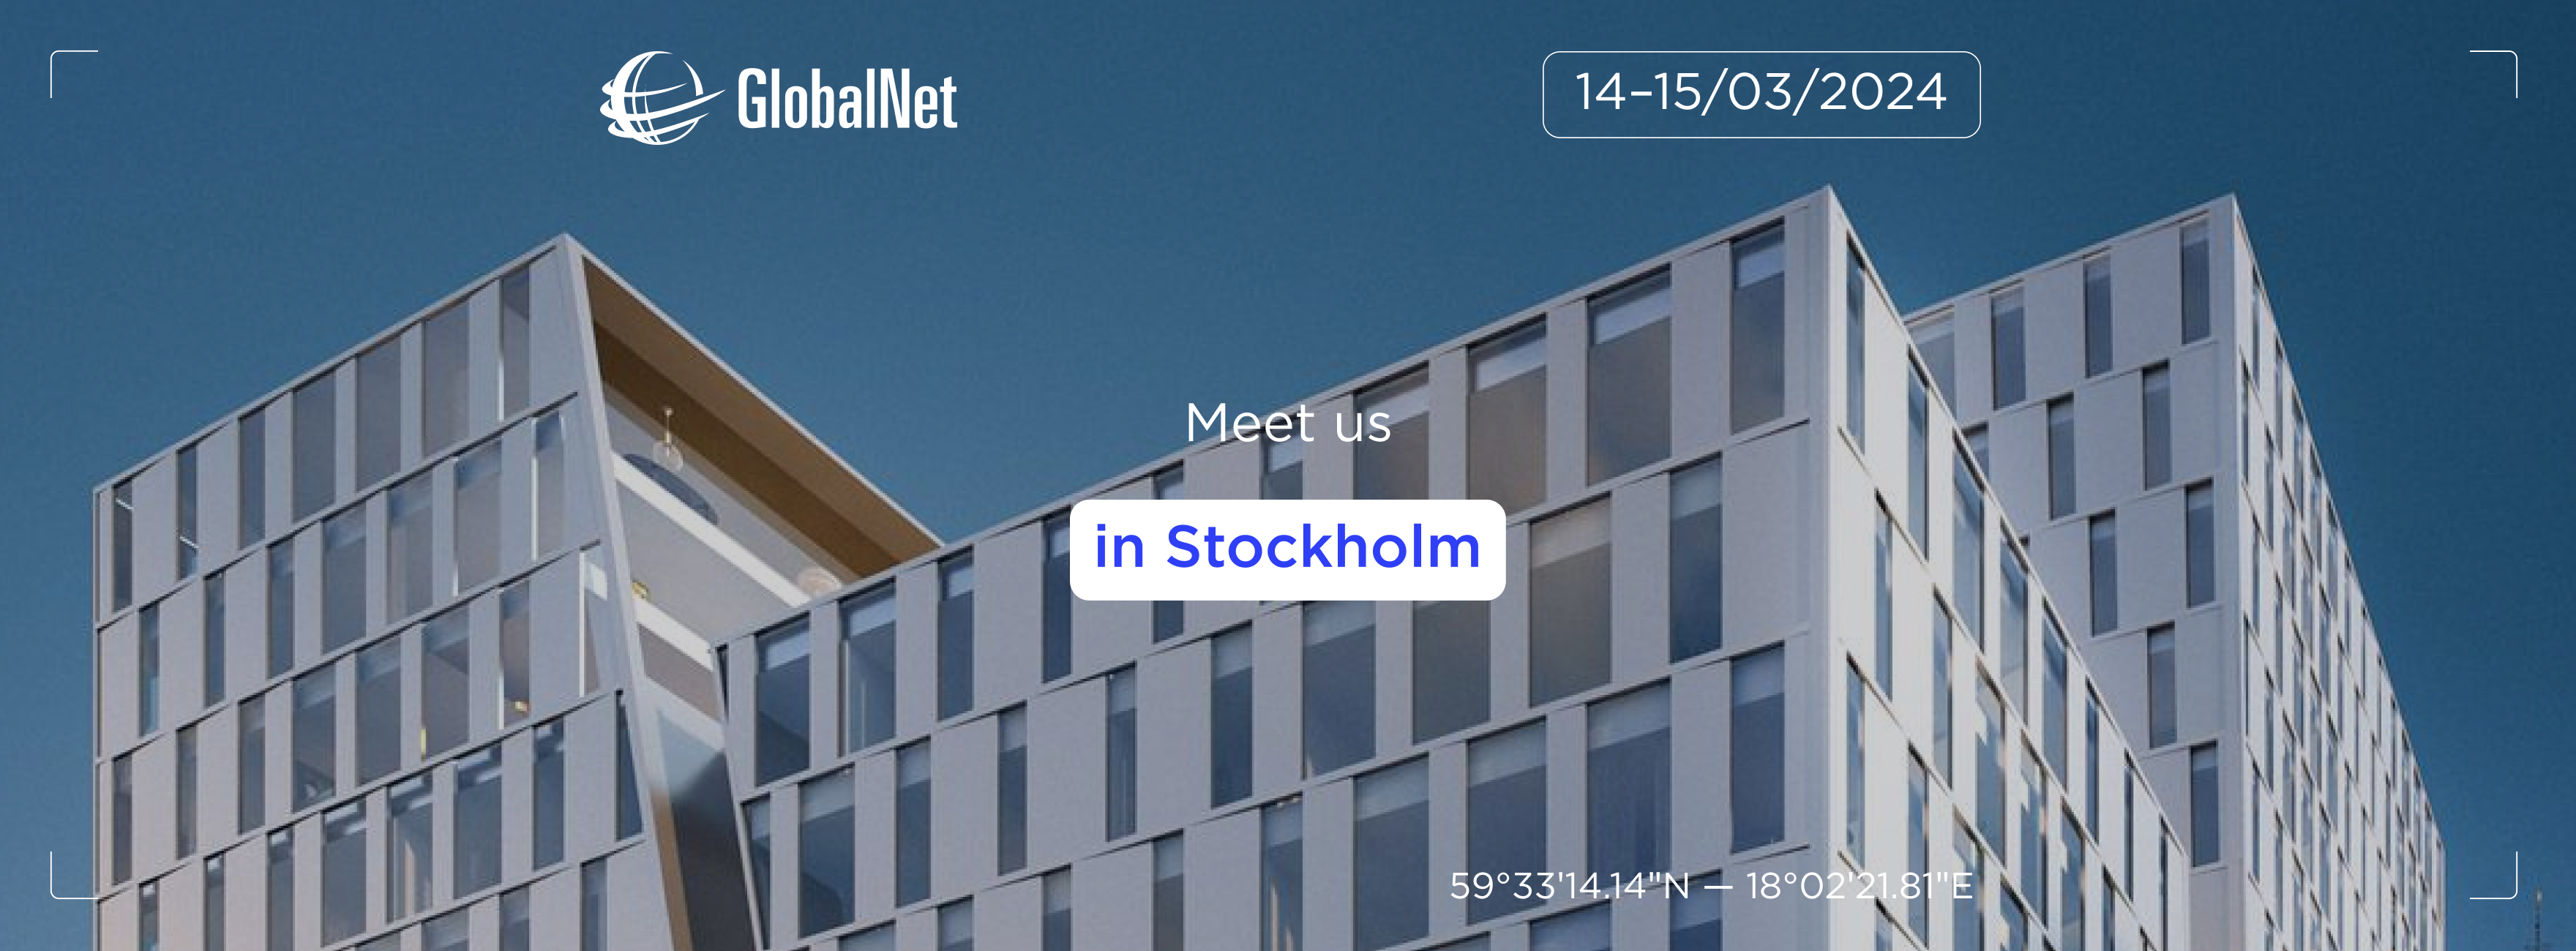 Let's meet in Stockholm